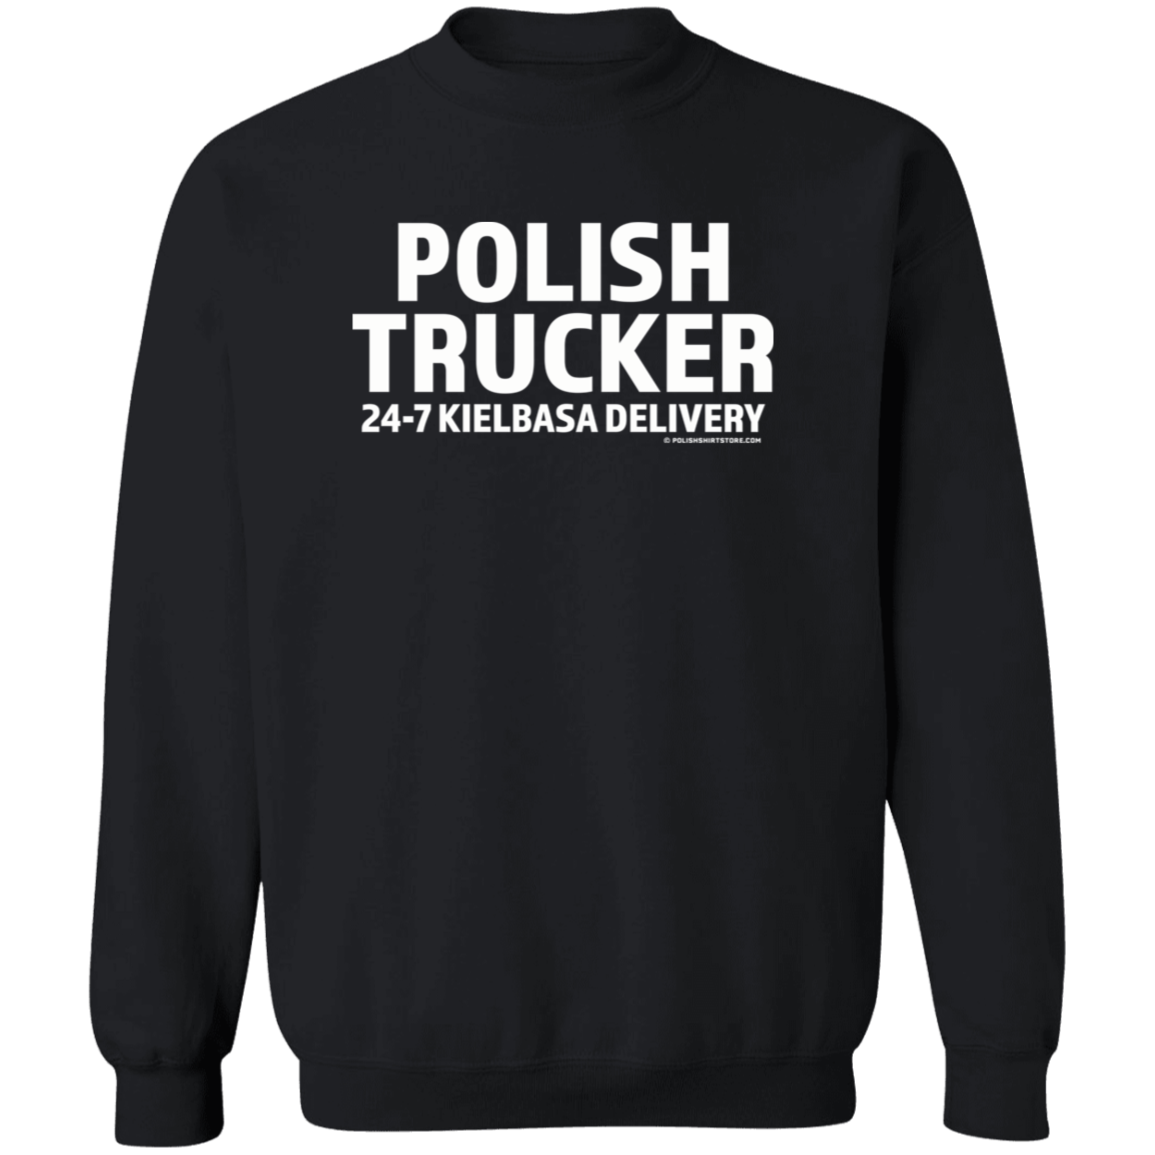 Polish Trucker 24-7 Kielbasa Delivery Apparel CustomCat G180 Crewneck Pullover Sweatshirt Black S